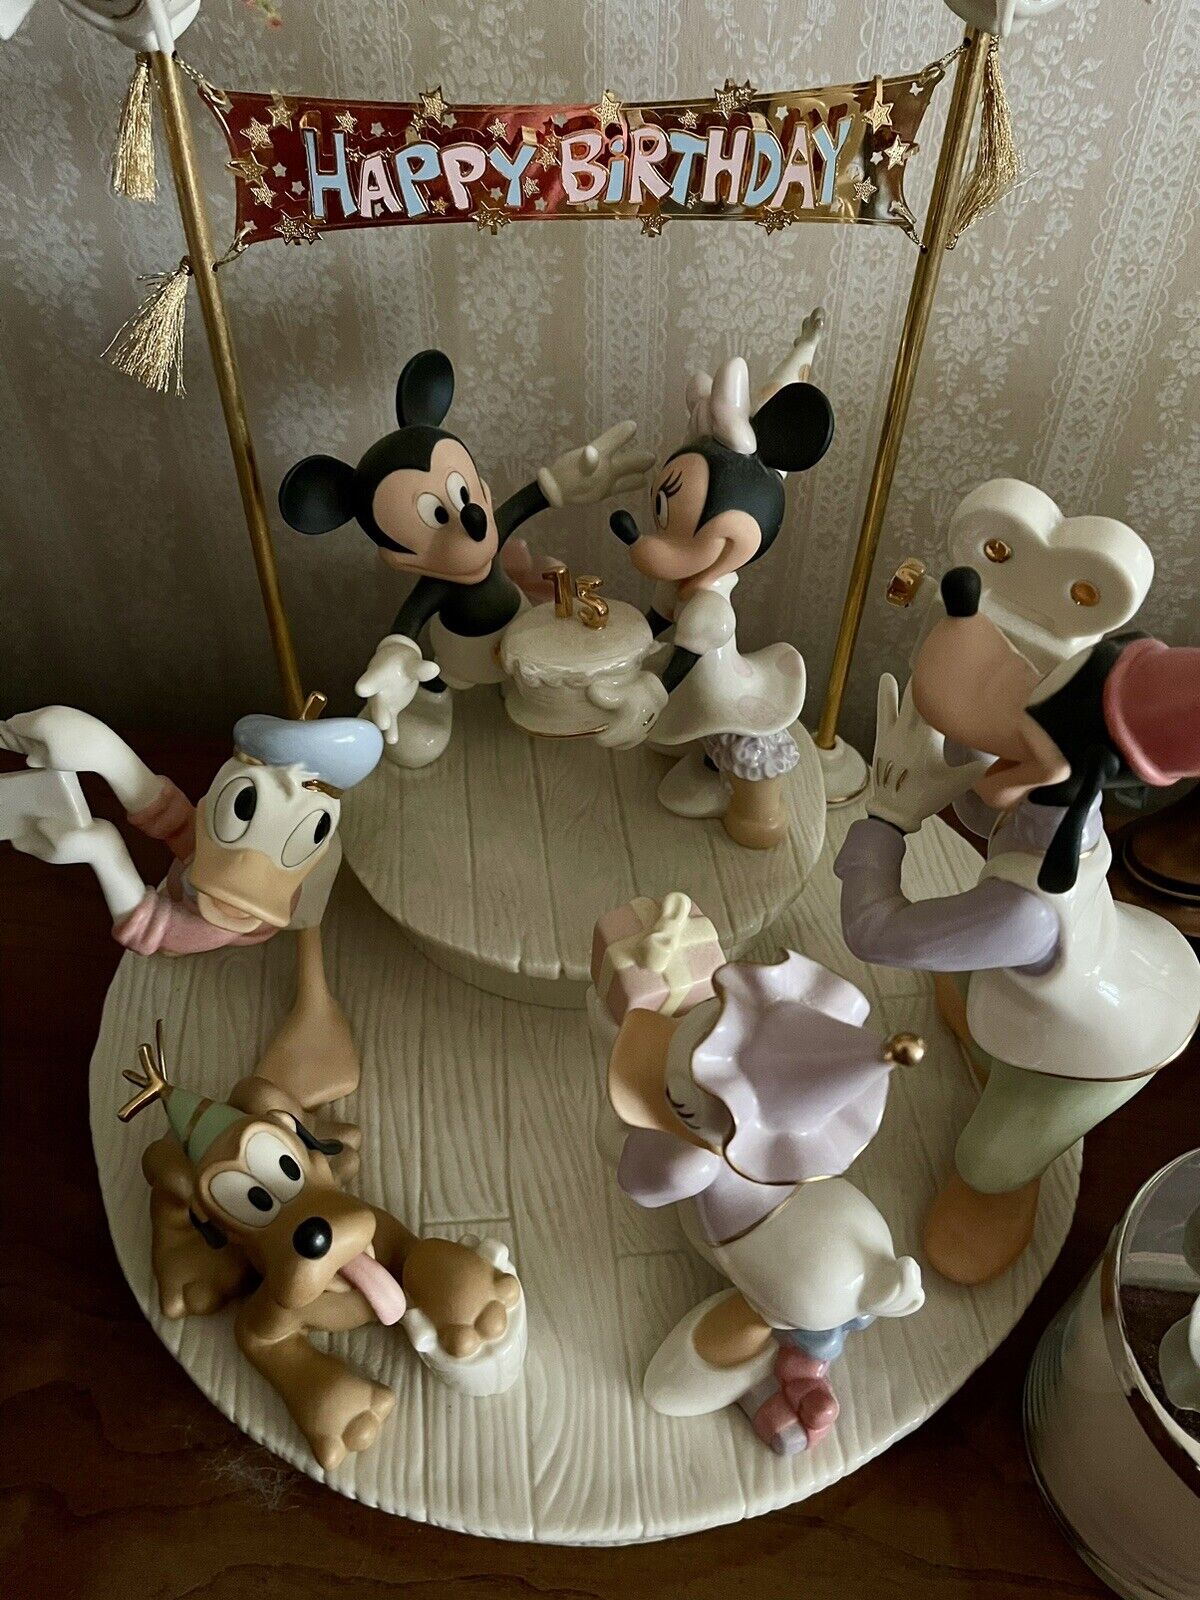 Disney\'s Happy Birthday Mickey’s Limited Edition 2002 by Lenox 75th Anniversary